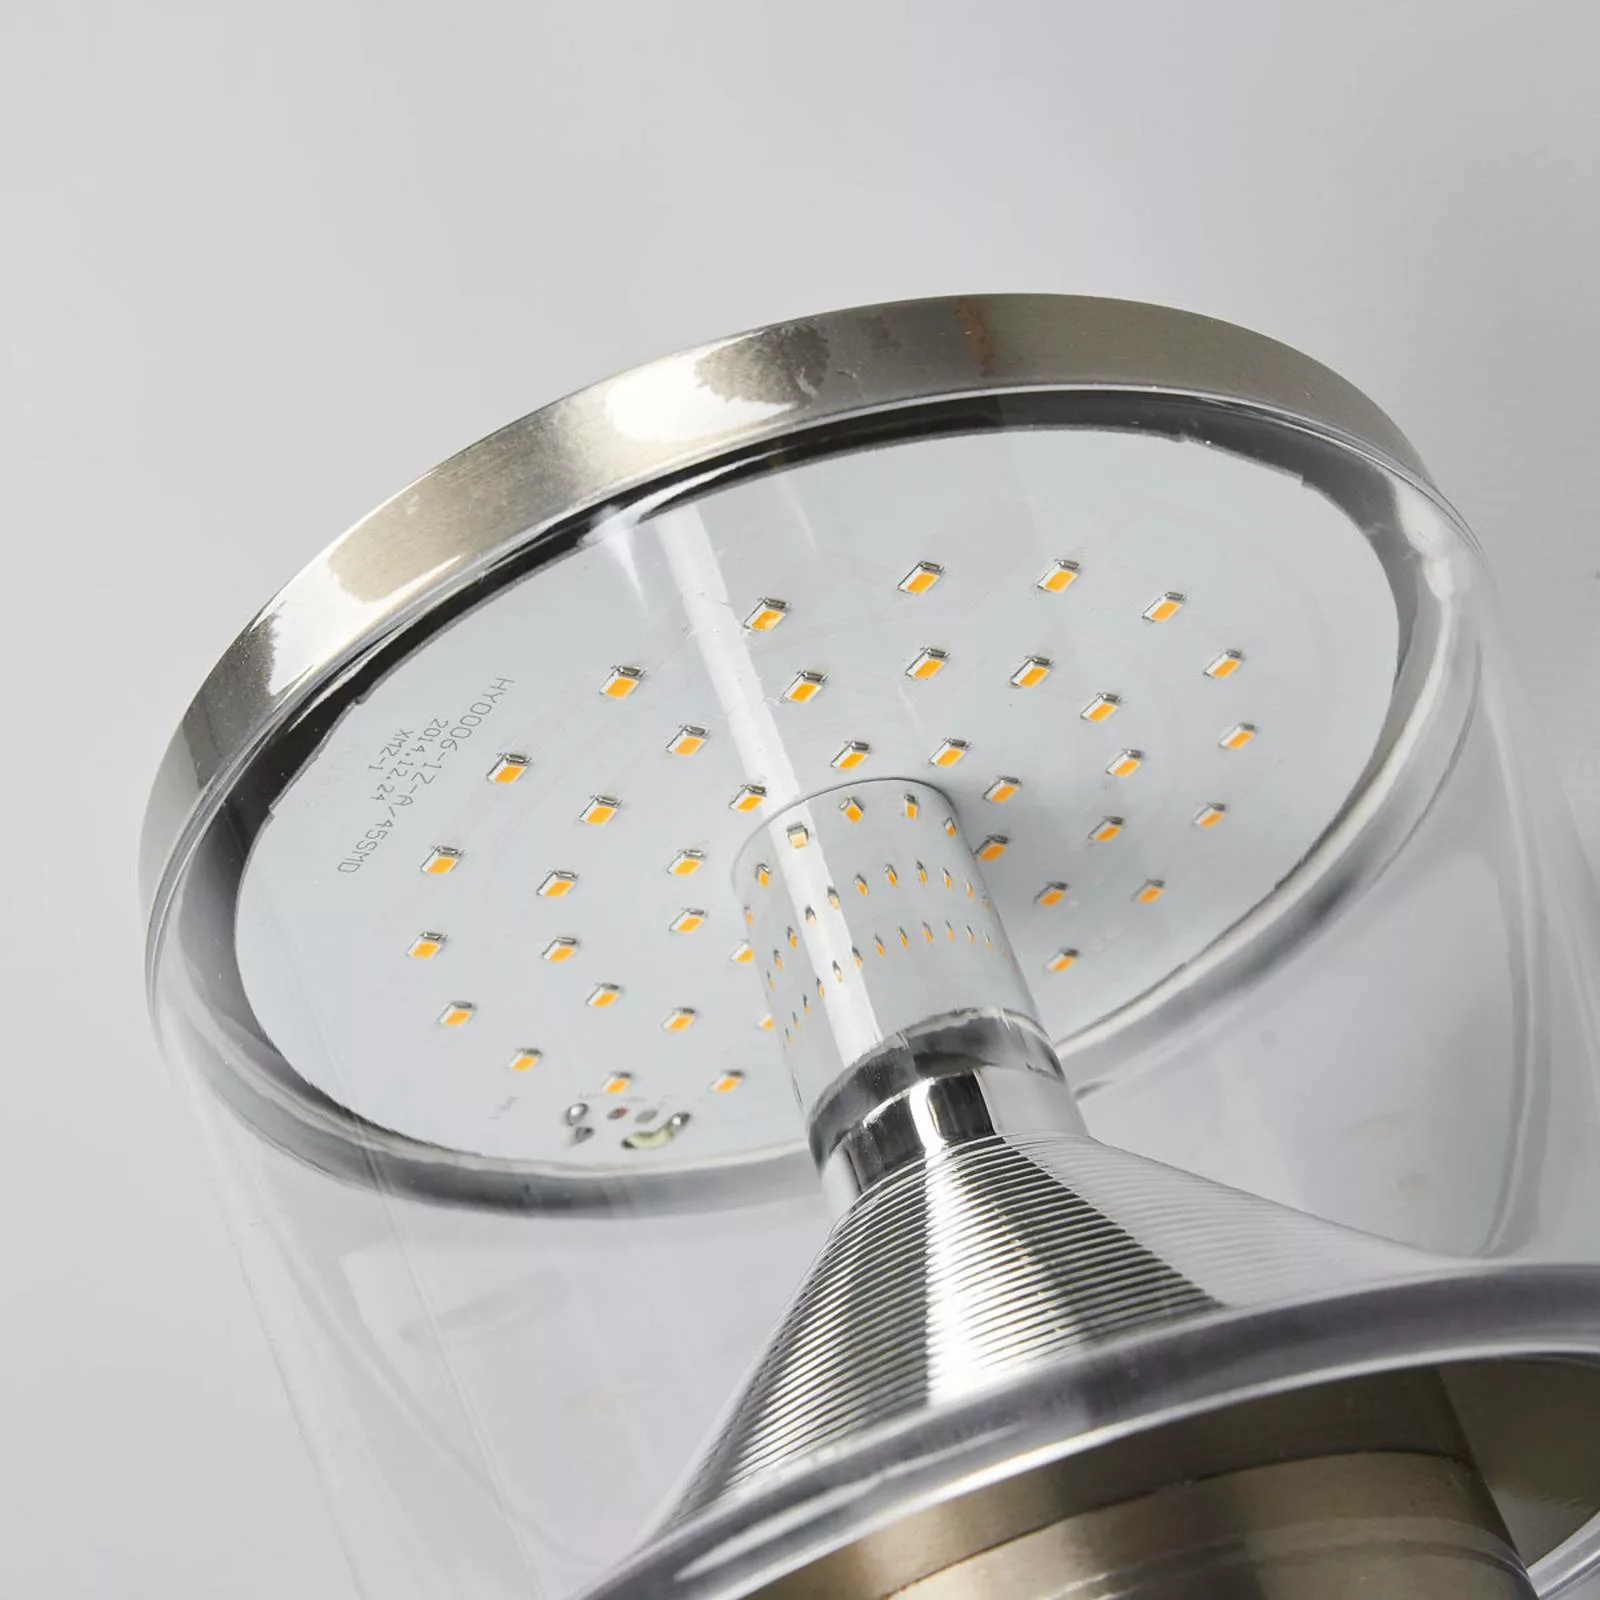 Edelstahl-LED-Außenwandlampe Antje günstig online kaufen